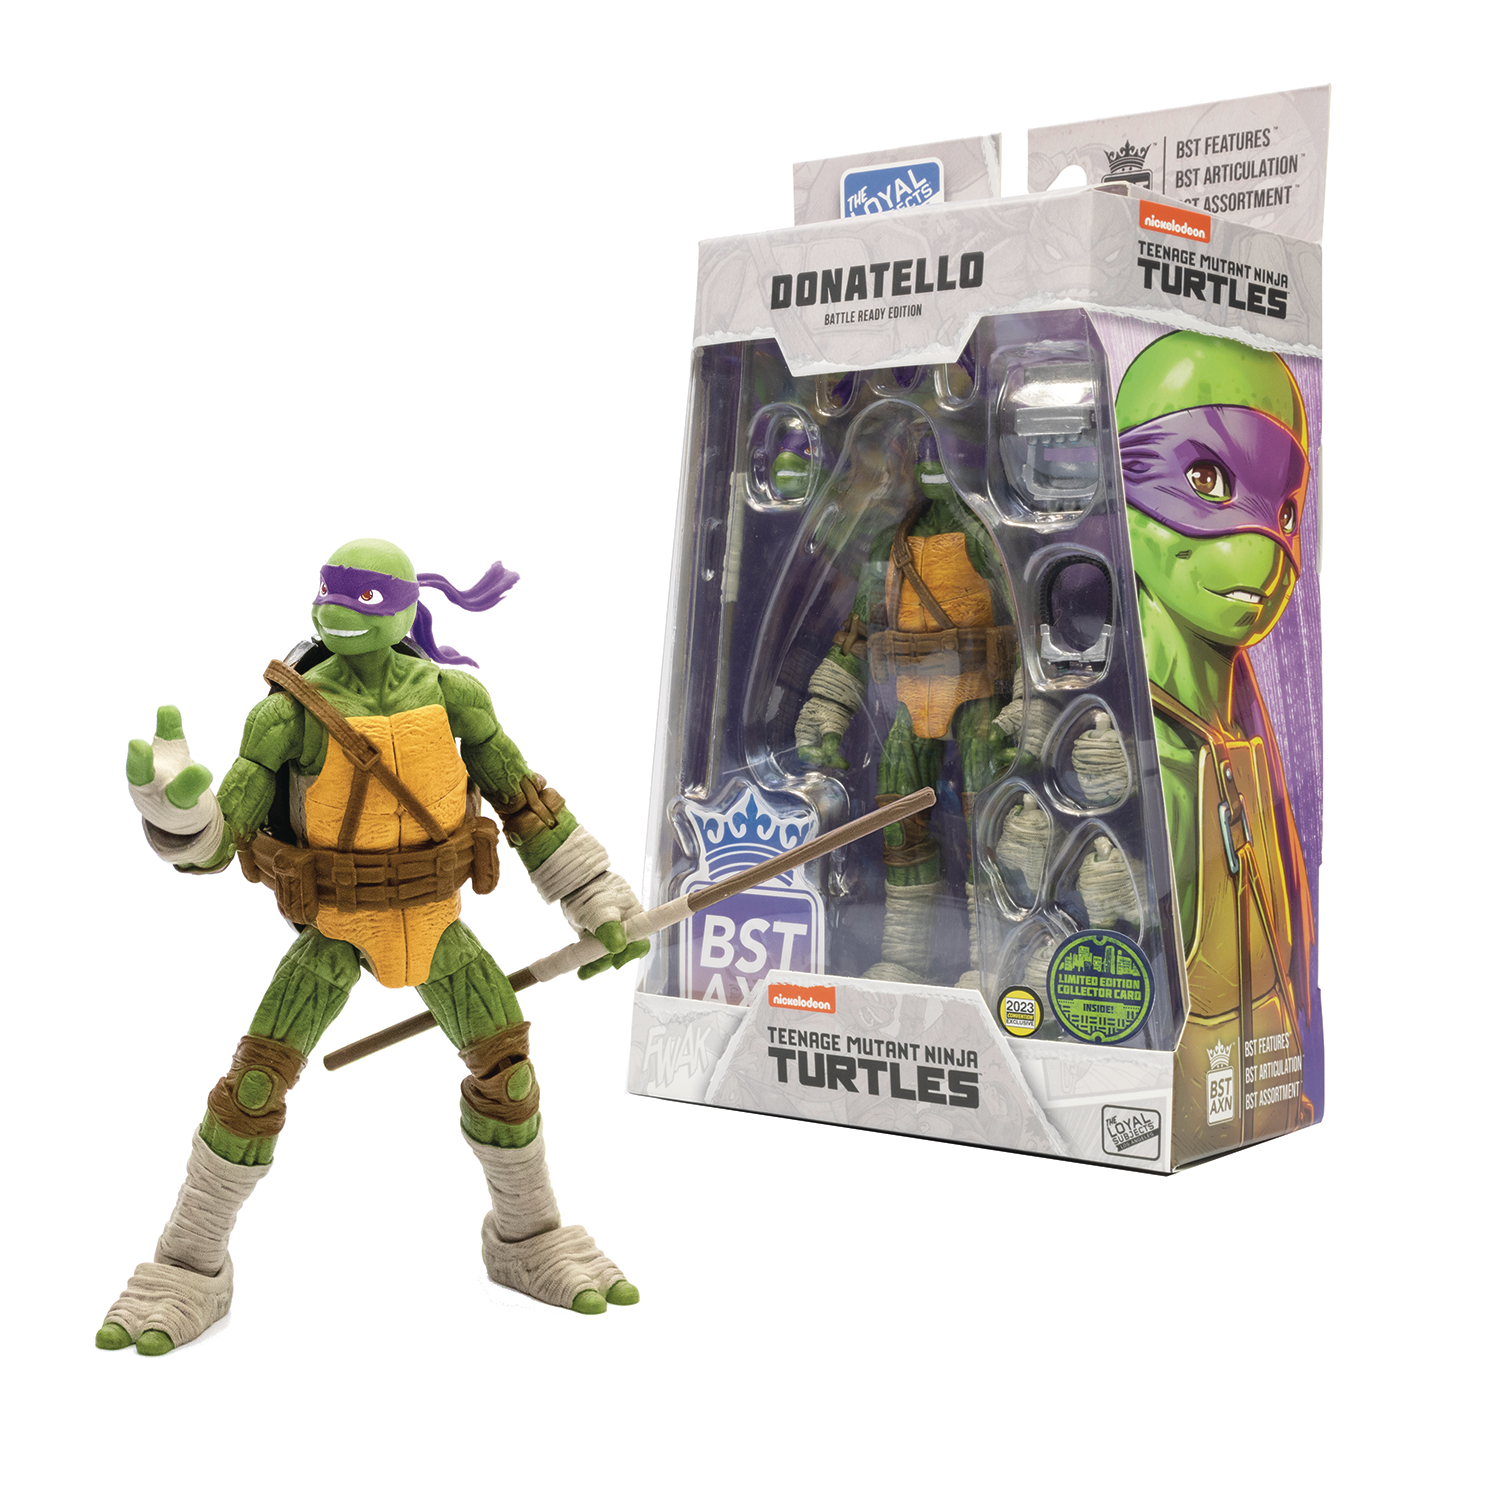 San Diego ComicCon 2023 Teenage Mutant Ninja Turtles Bst Axn Donatello Comic 5-Inch Action Figure